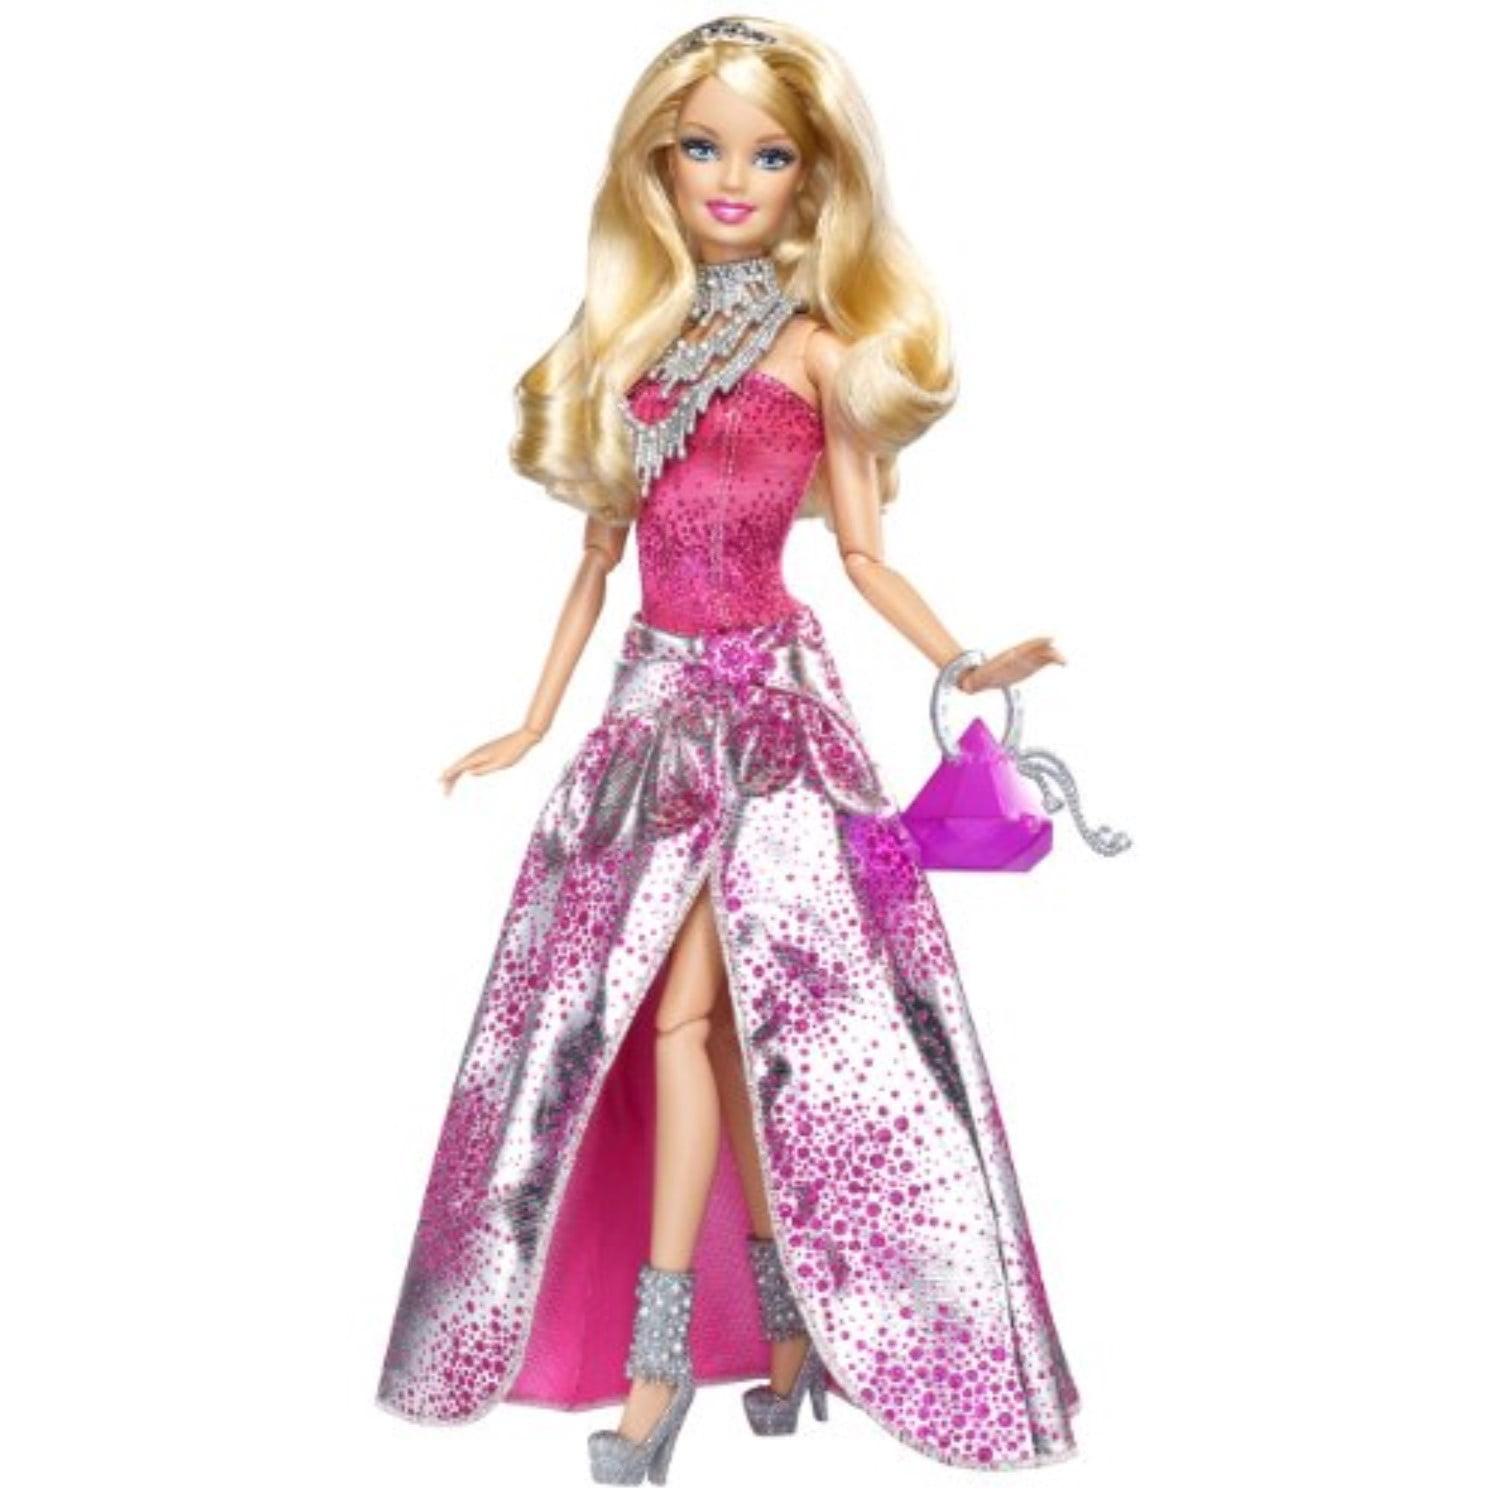 Barbie Fashionistas Gown Glam Doll - Walmart.com - Walmart.com